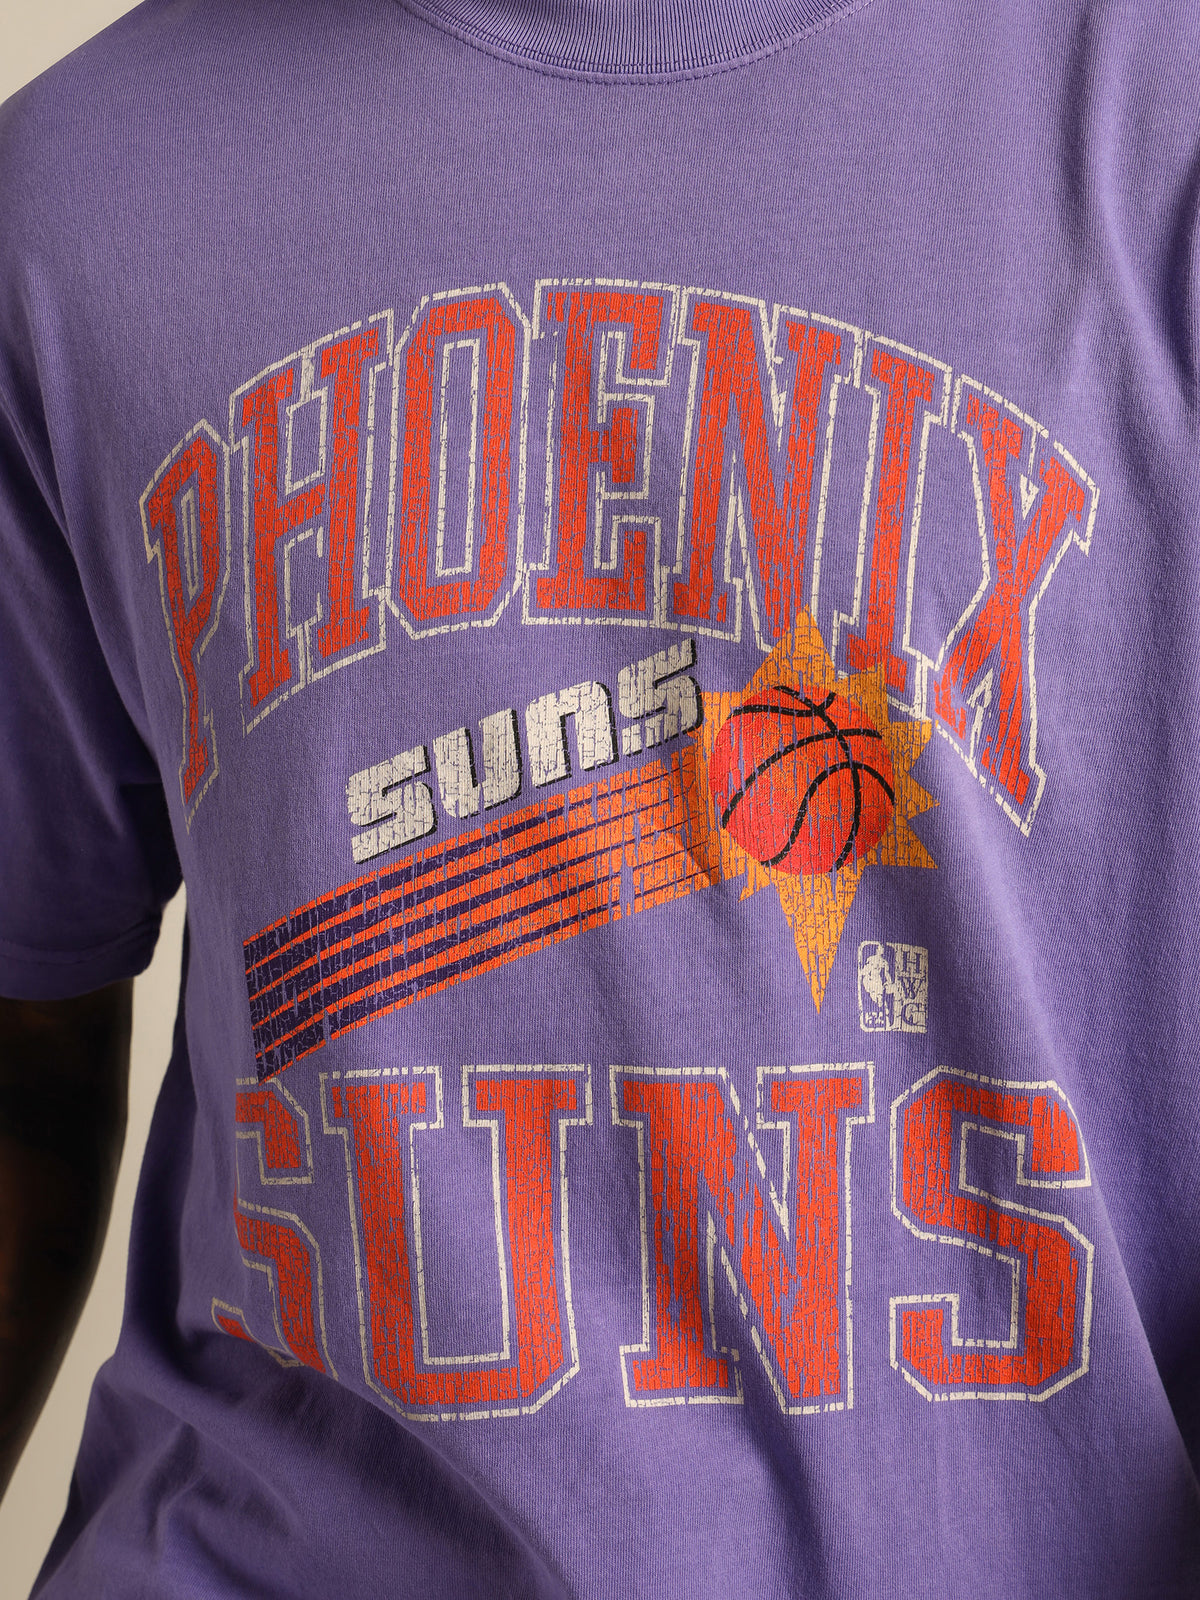 Phoenix Suns Vintage T-Shirt in Purple